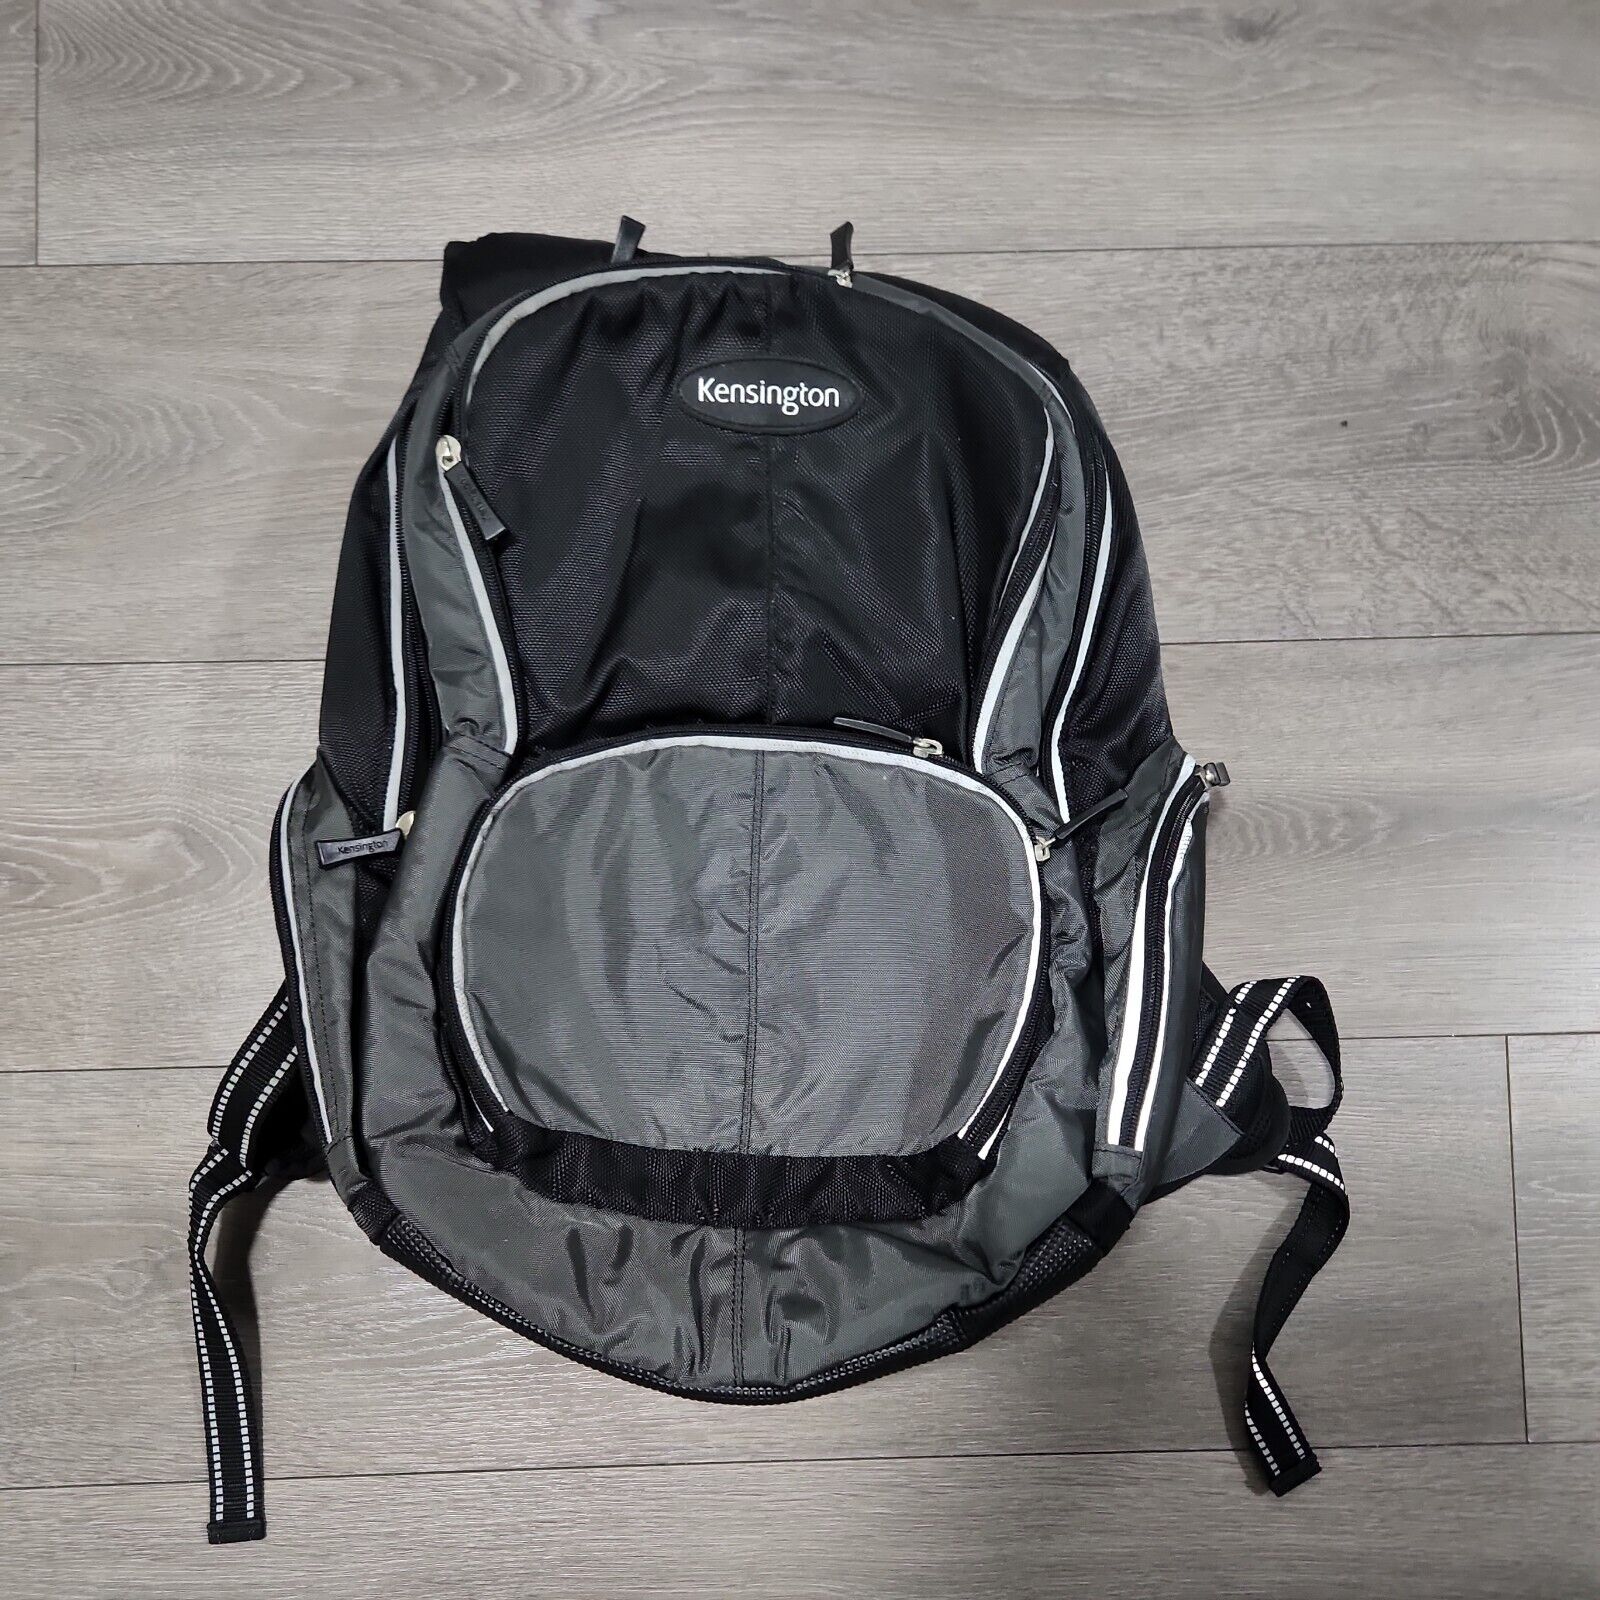 Kensington Black Computer Backpack Travel Bag-Fits  Laptops-Very Nice